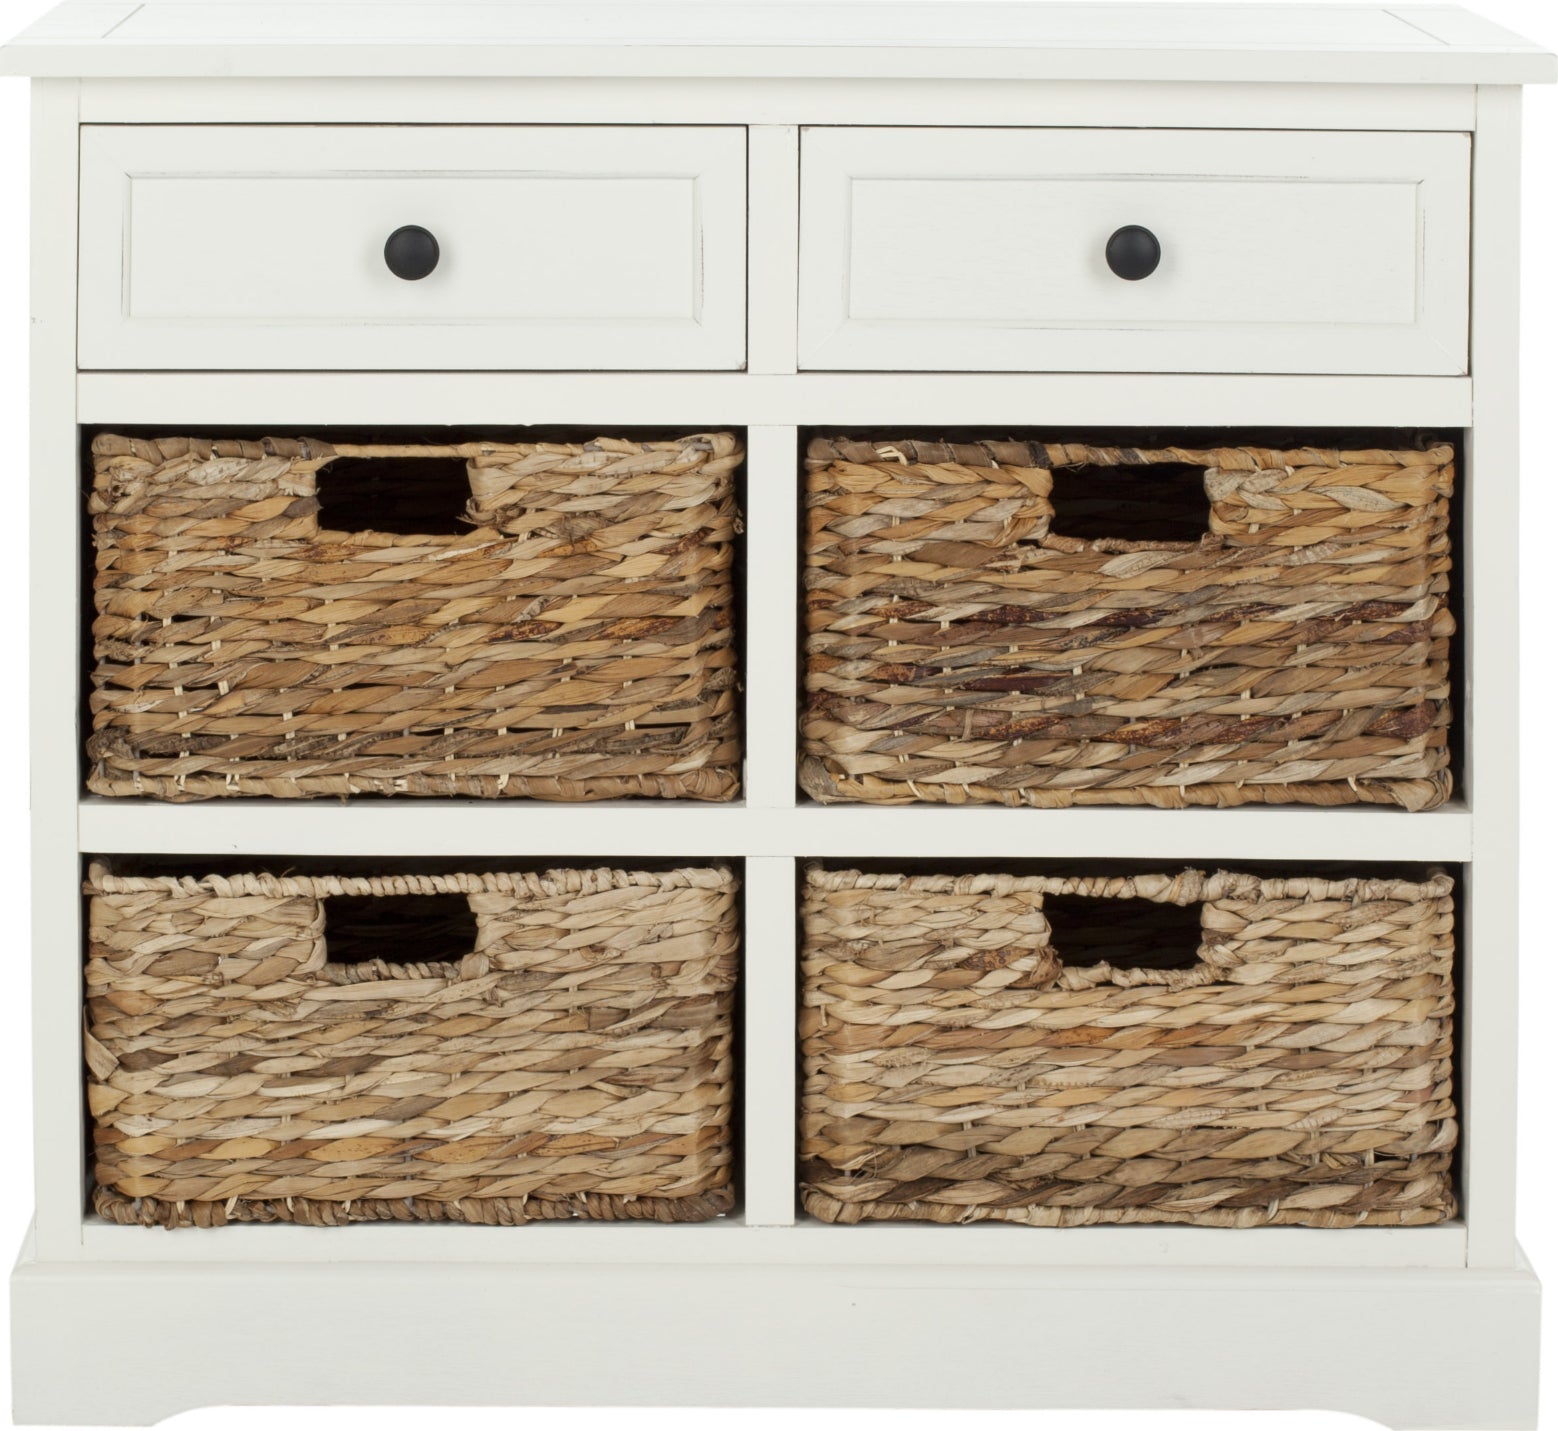 Safavieh Herman Storage Unit With Wicker Baskets Distressed Cream Furniture main image